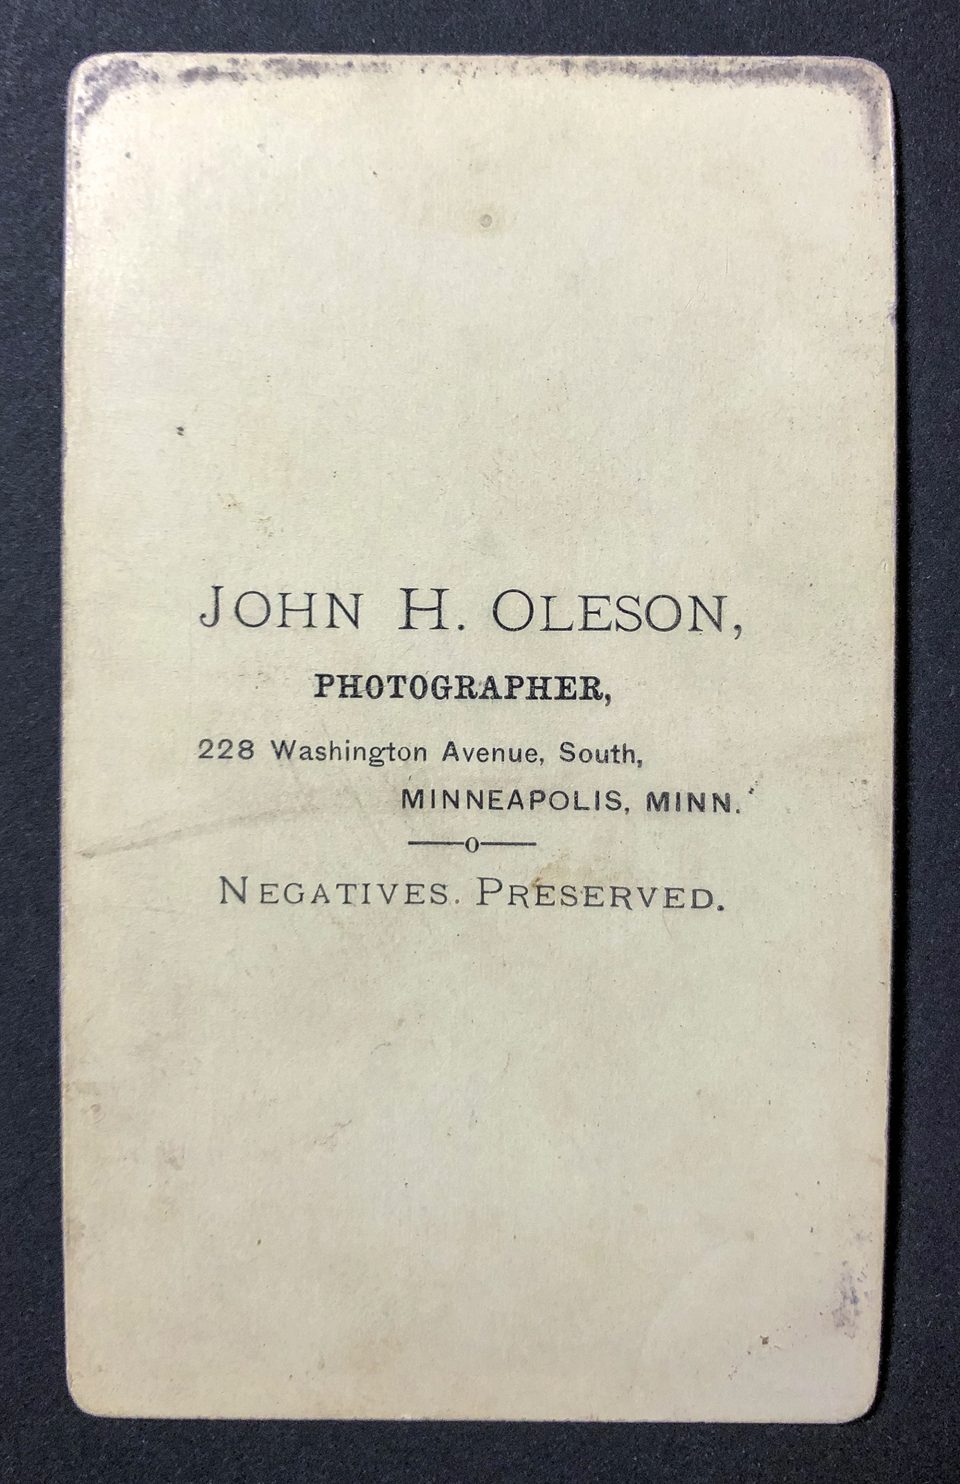 The reverse of the carte de visite says Hohn H. Oleson, 228 Washington Avenue South, Minneapolis, Minn., Negatives preserved.